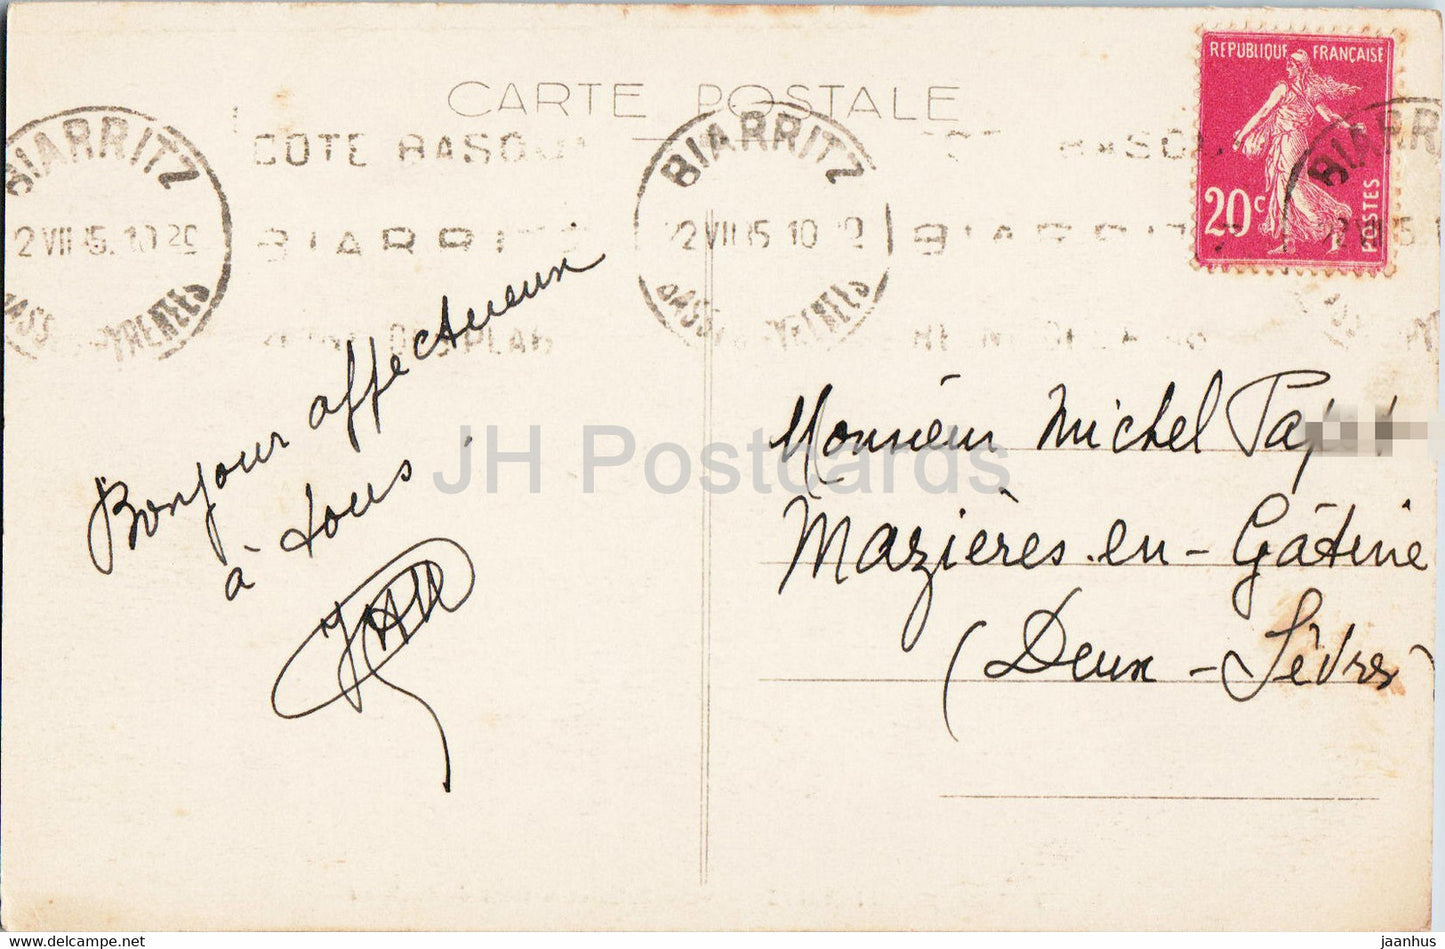 Biarritz - Villa Belza et la Dent du Cachaou - 19 - alte Postkarte - 1935 - Frankreich - gebraucht